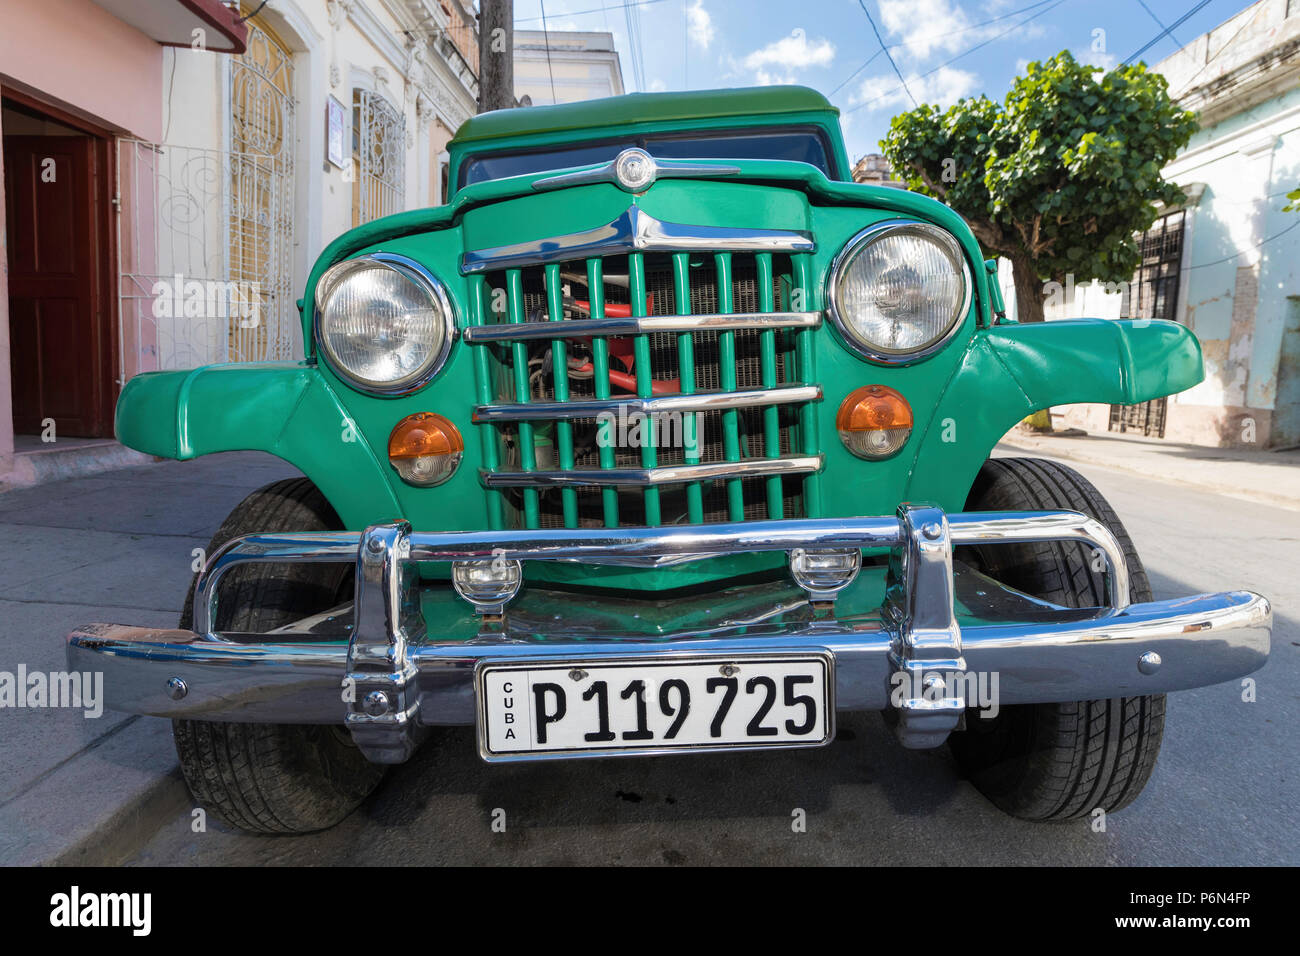 Classic 1950 s Willy's Jeep Taxi, lokal bekannt als "almendrones" in der Stadt Cienfuegos, Kuba. Stockfoto